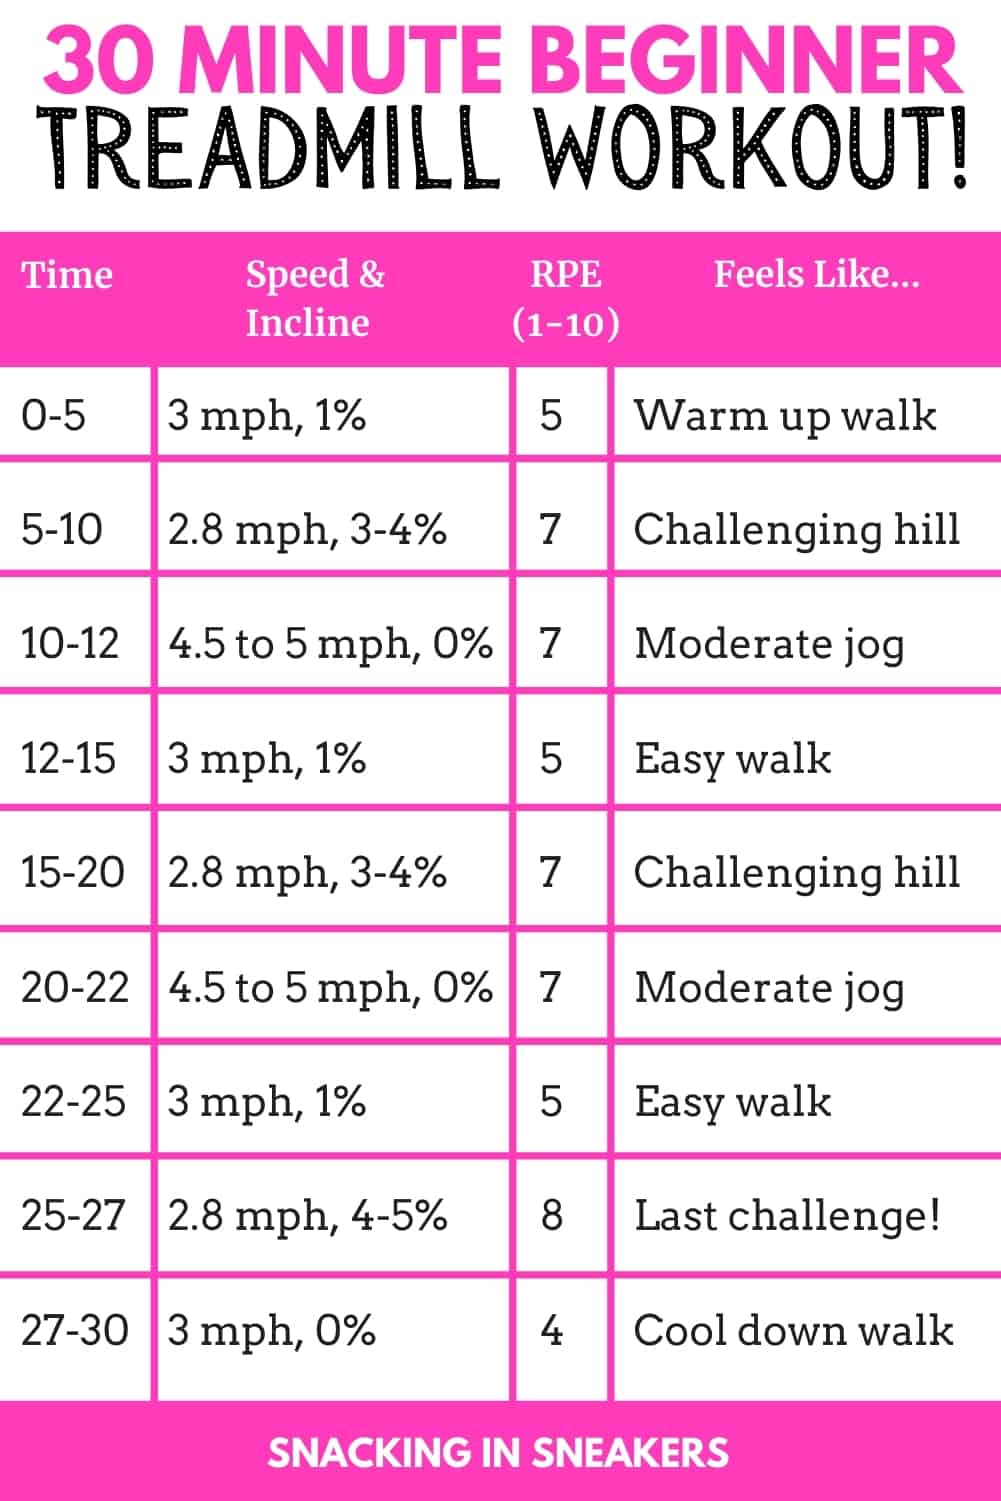 30 Minute Treadmill Speed Workout - Run Eat Repeat